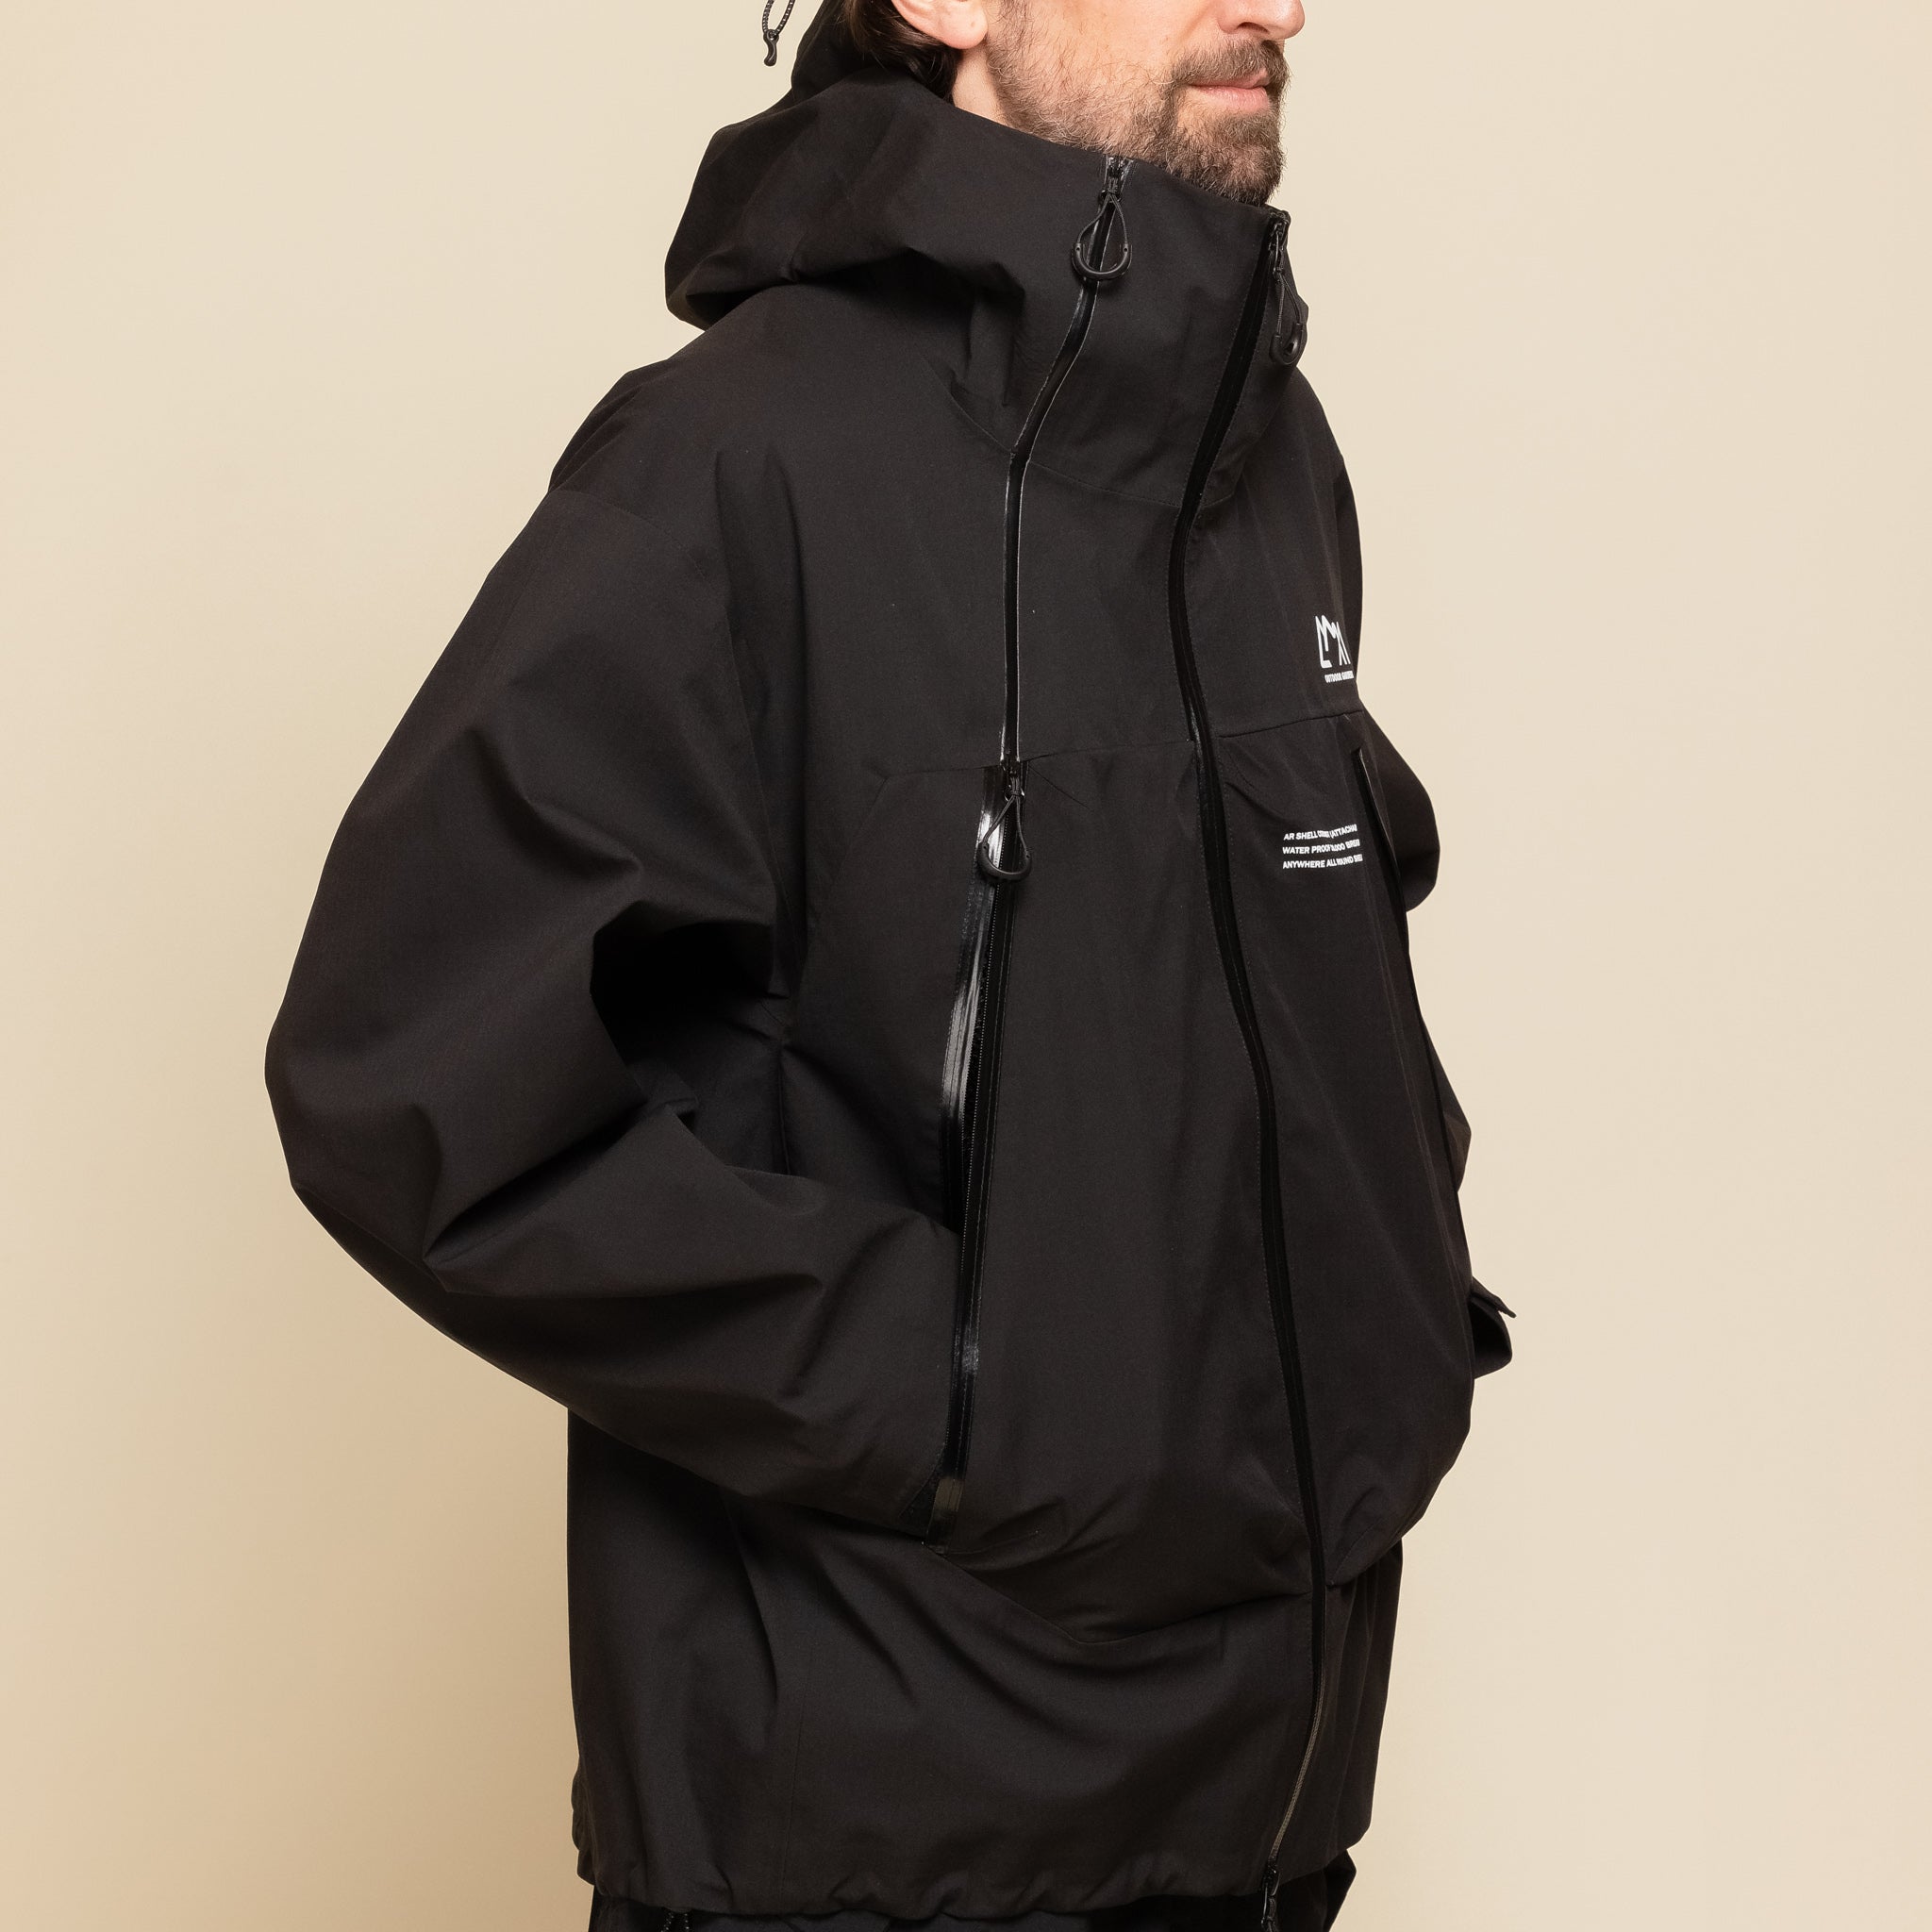 CMF Comfy Outdoor Garment - AR Shell Coexist Jacket - Black